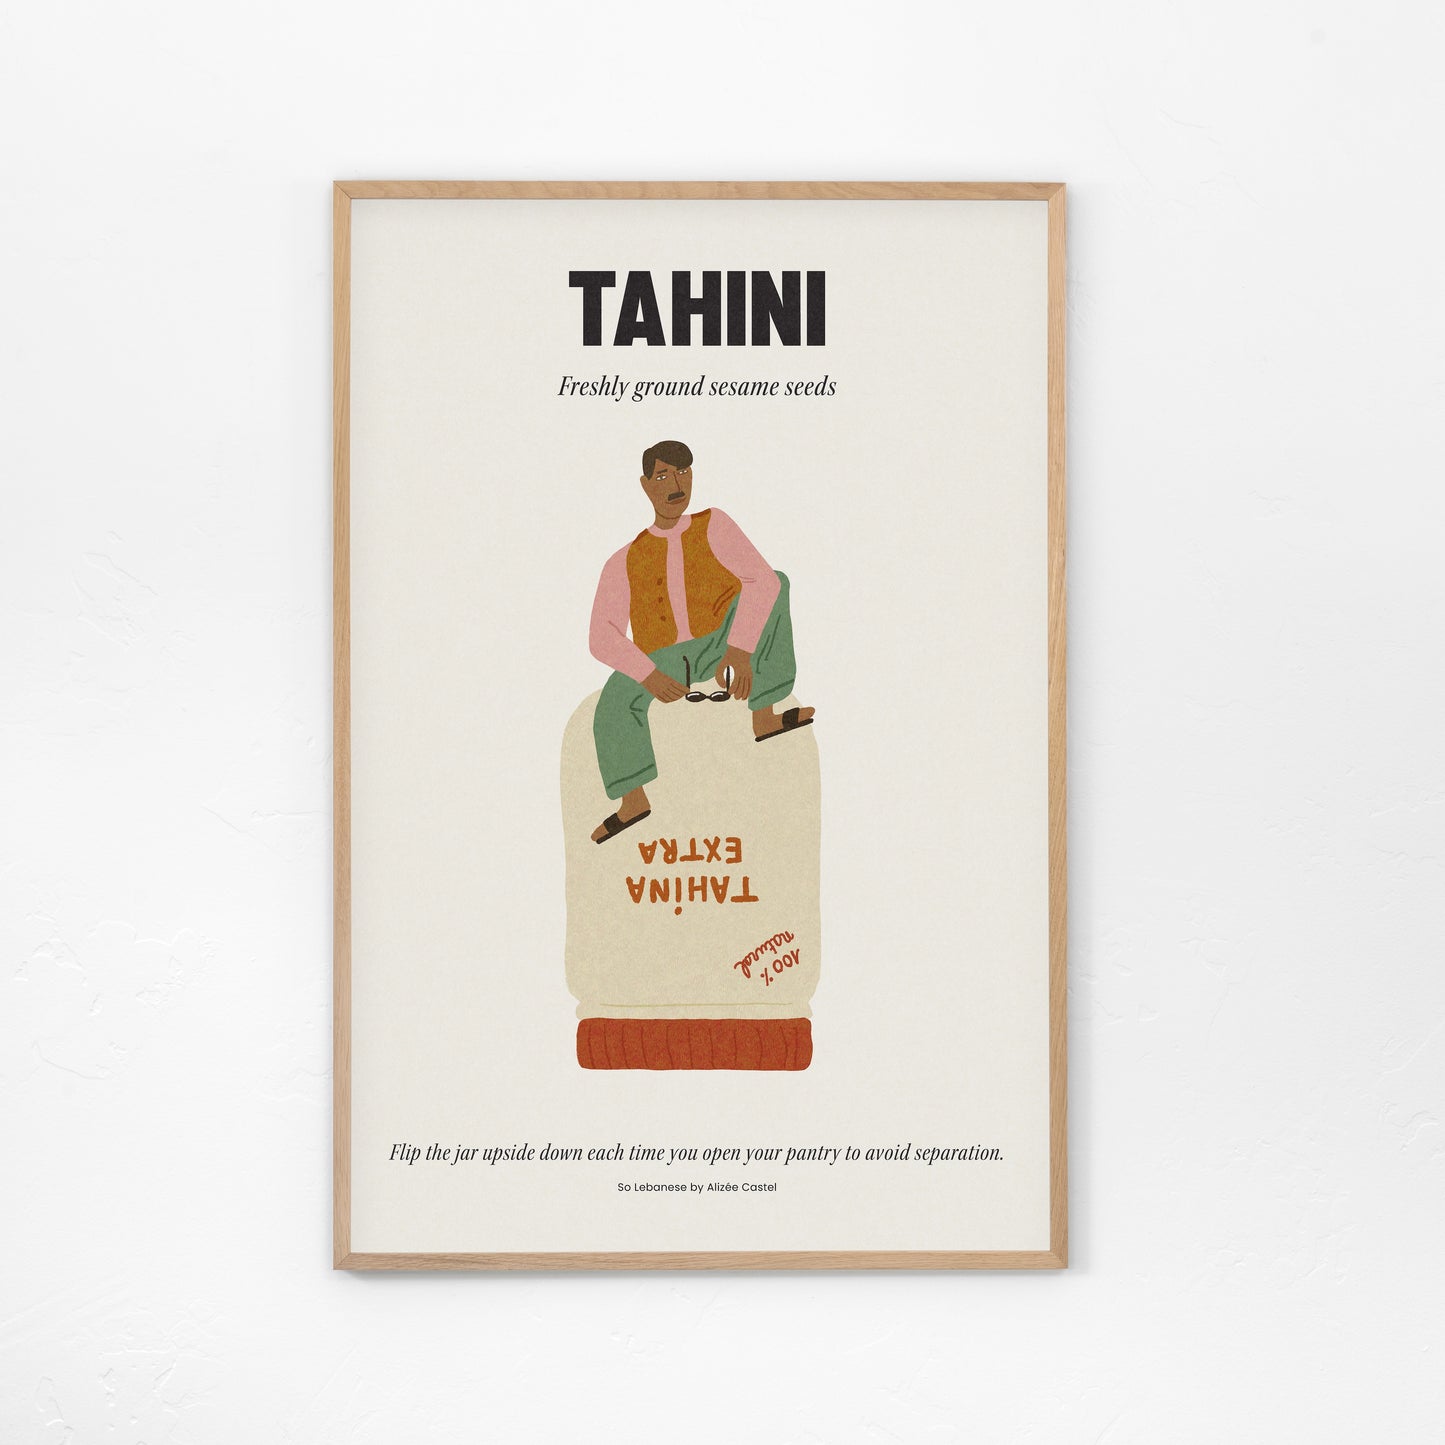 Tahini, Freshly ground sesame seeds